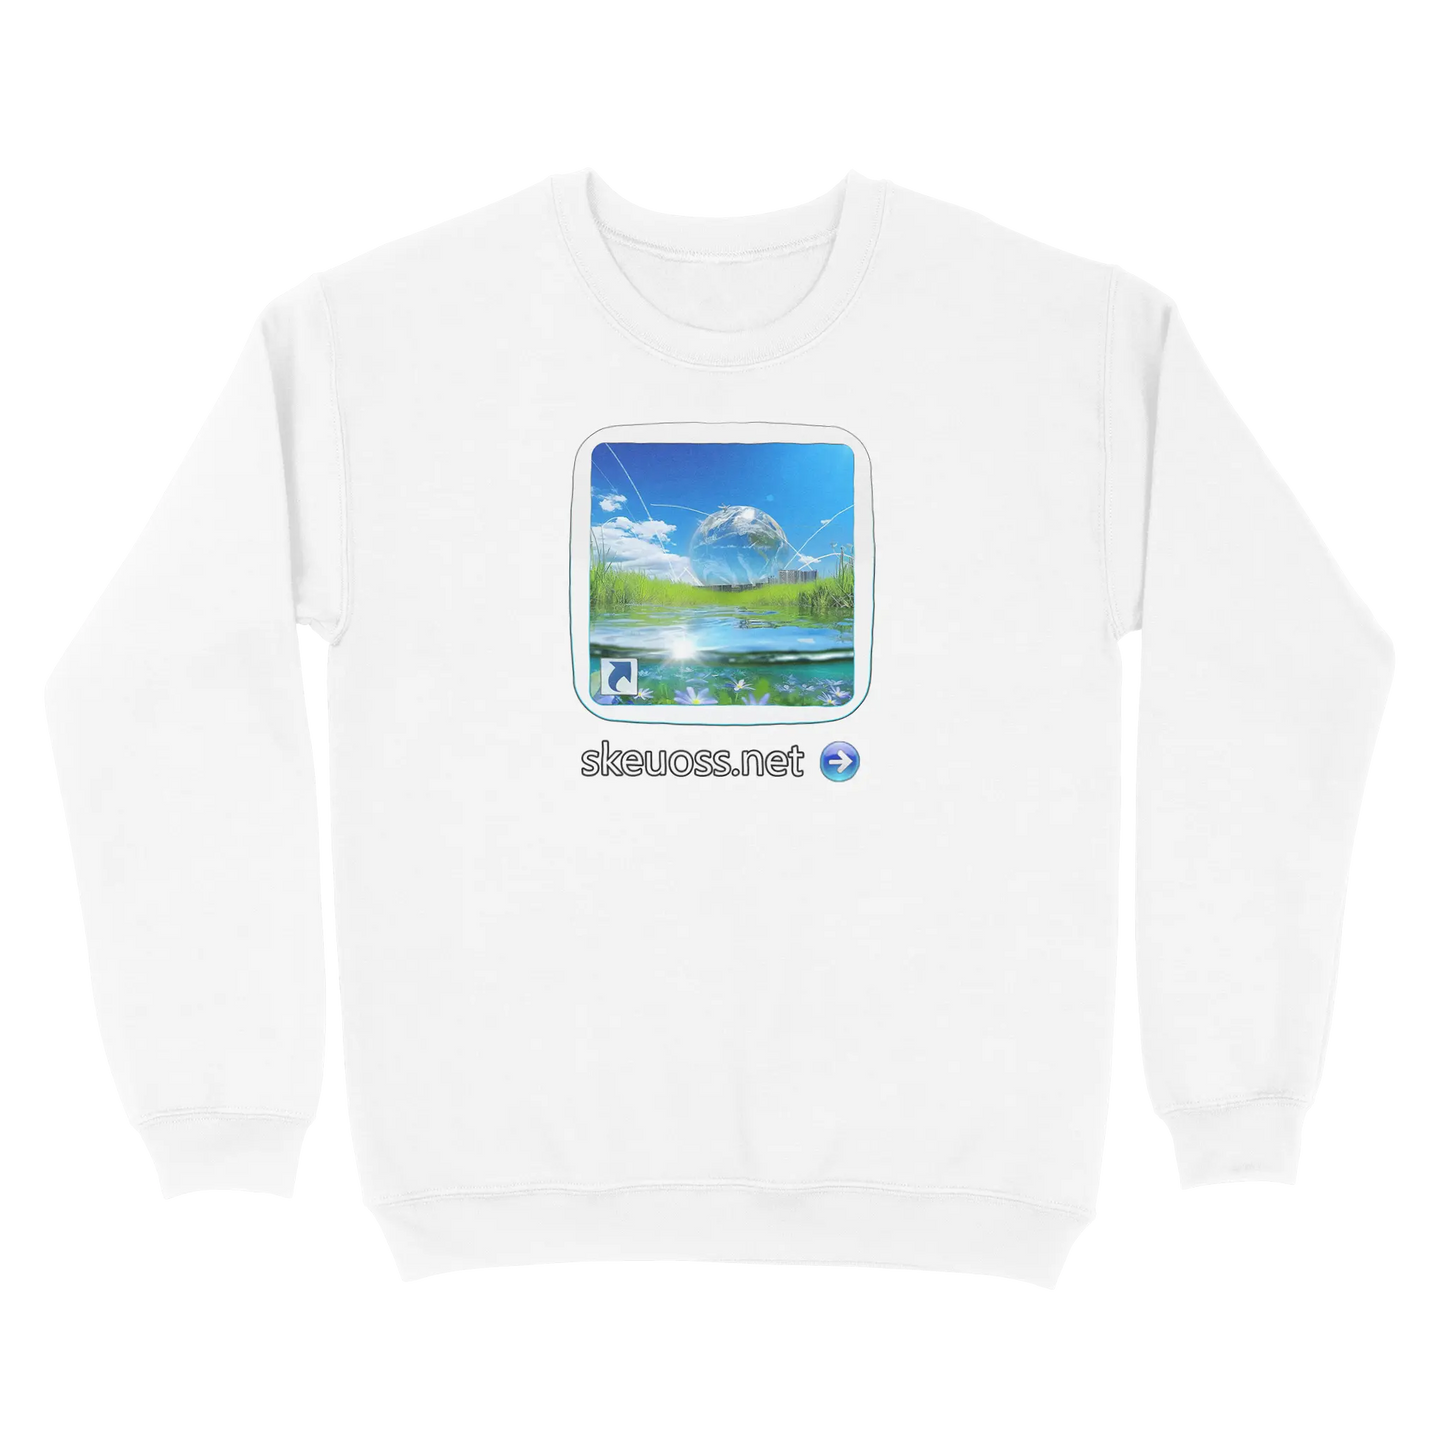 Frutiger Aero Sweatshirt - User Login Collection - User 342